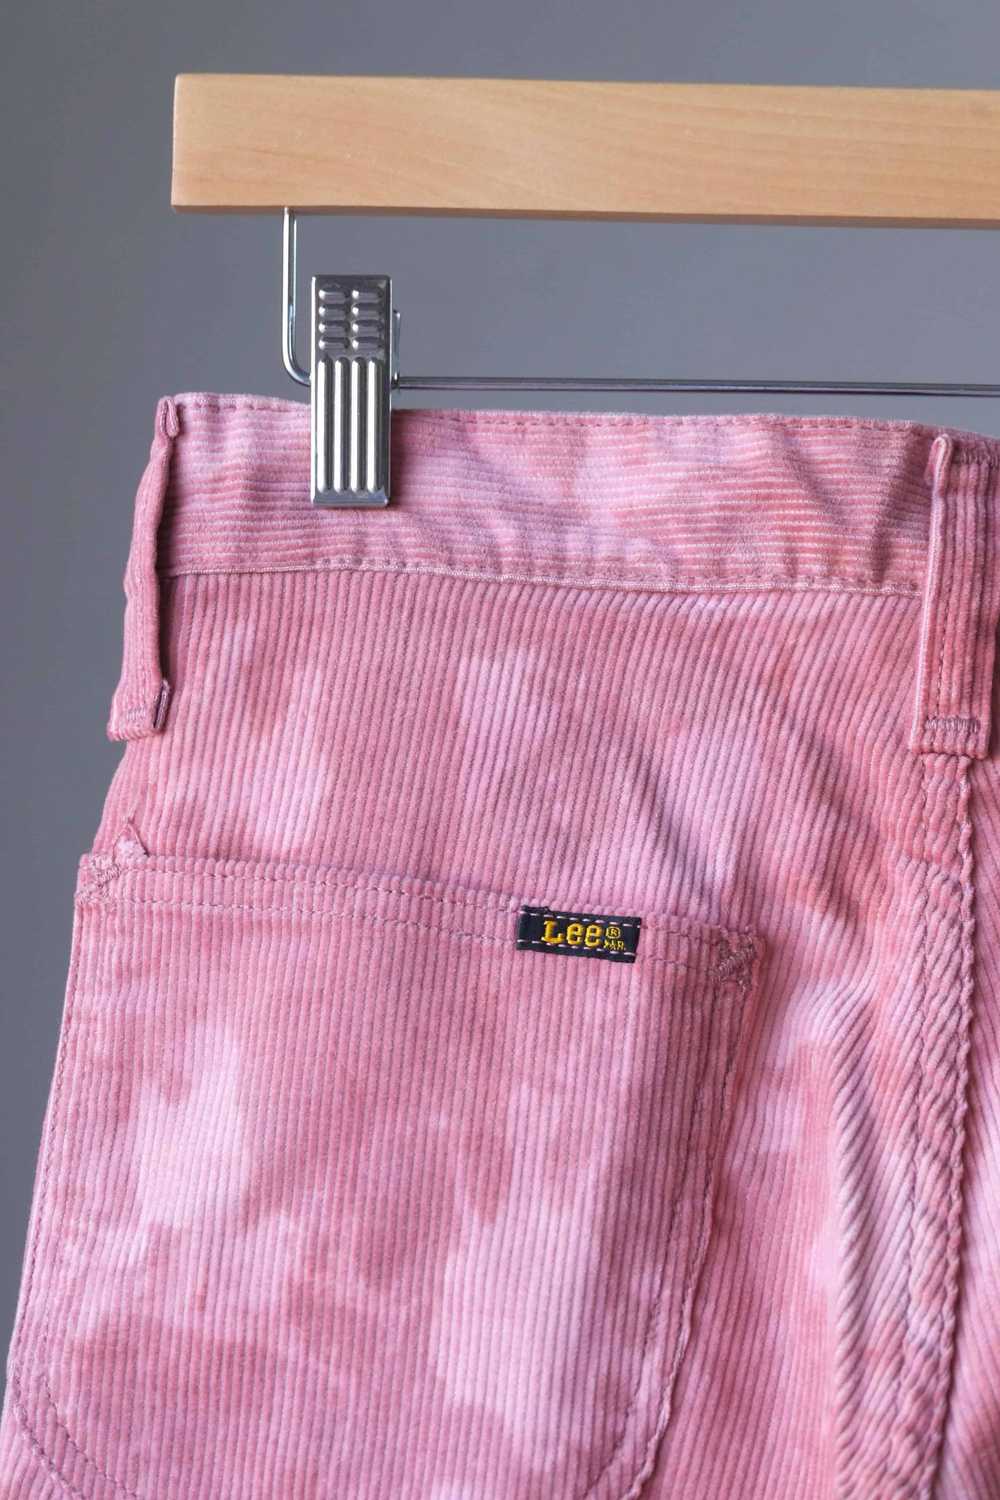 LEE Corduroy Tie-Dye 70's Bell Bottoms - Pink - image 6